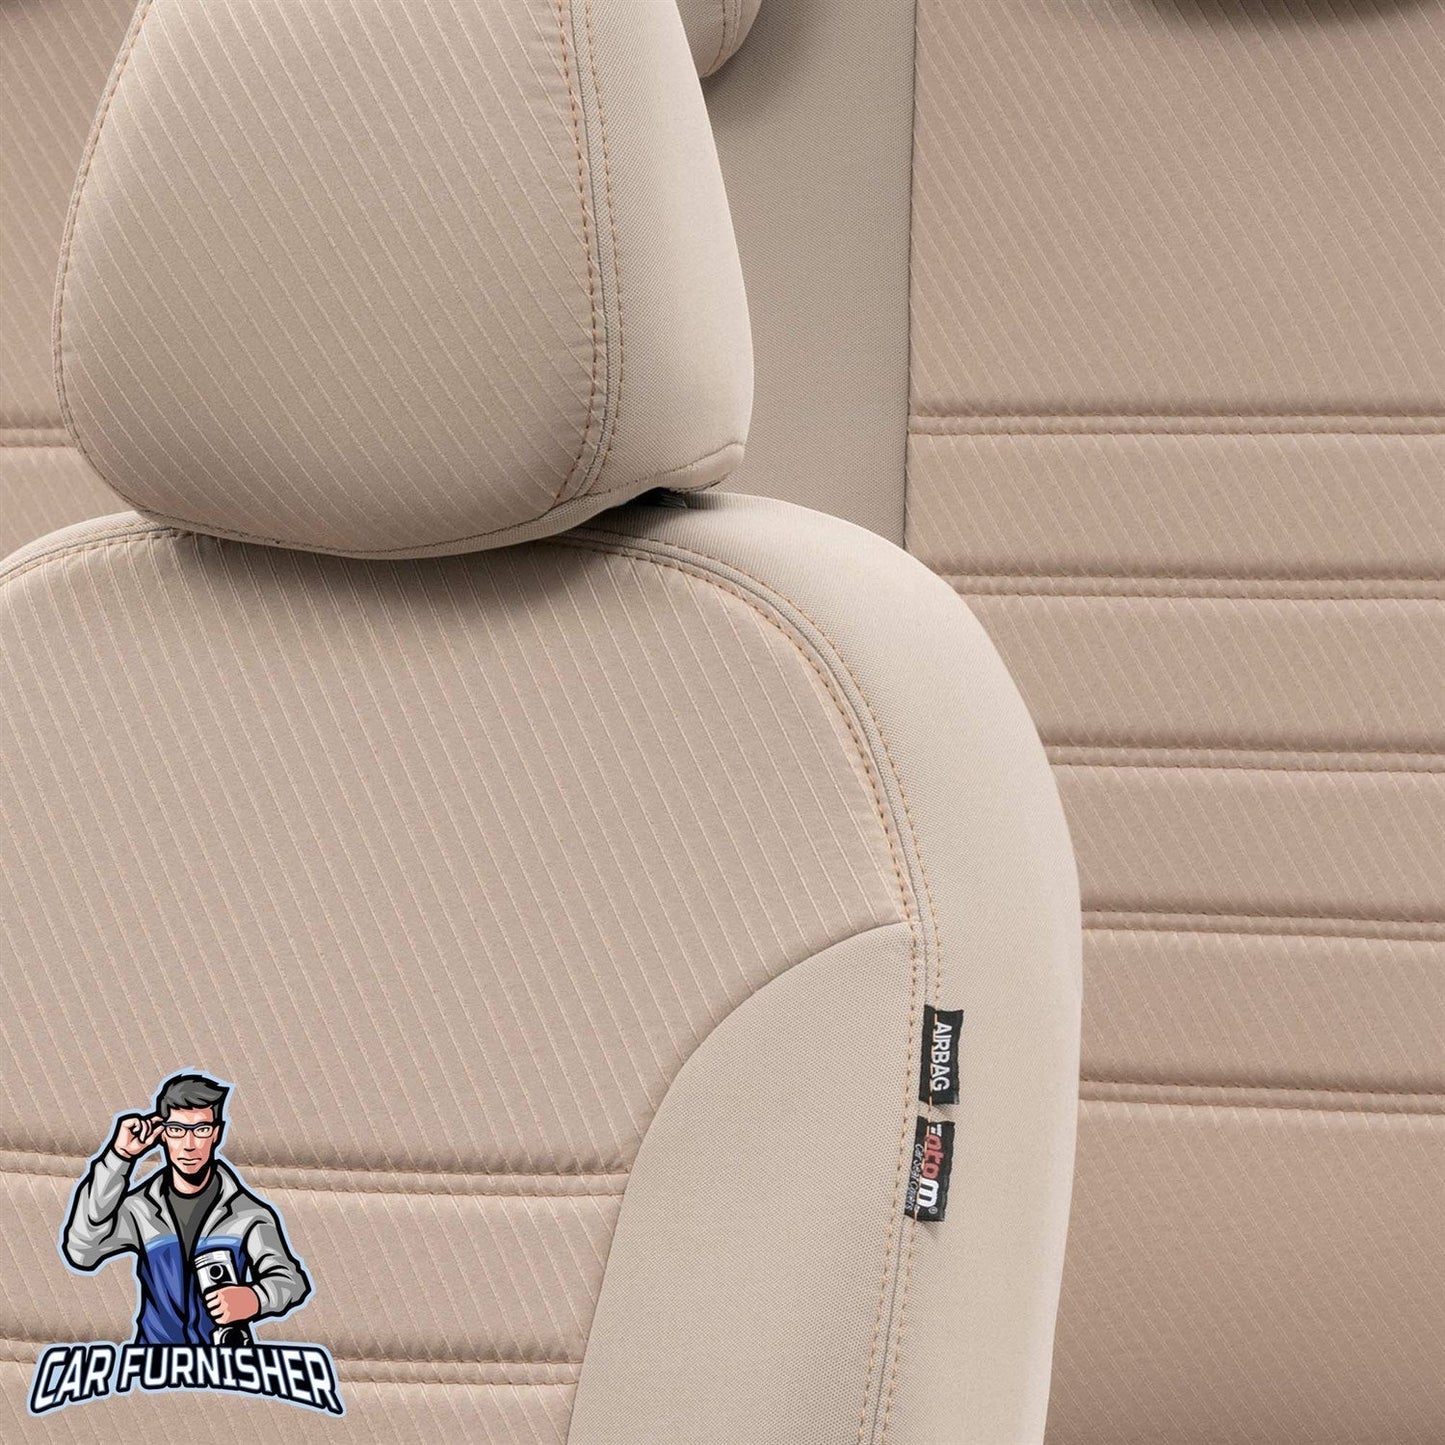 Ford Mondeo Seat Covers Original Jacquard Design Dark Beige Jacquard Fabric